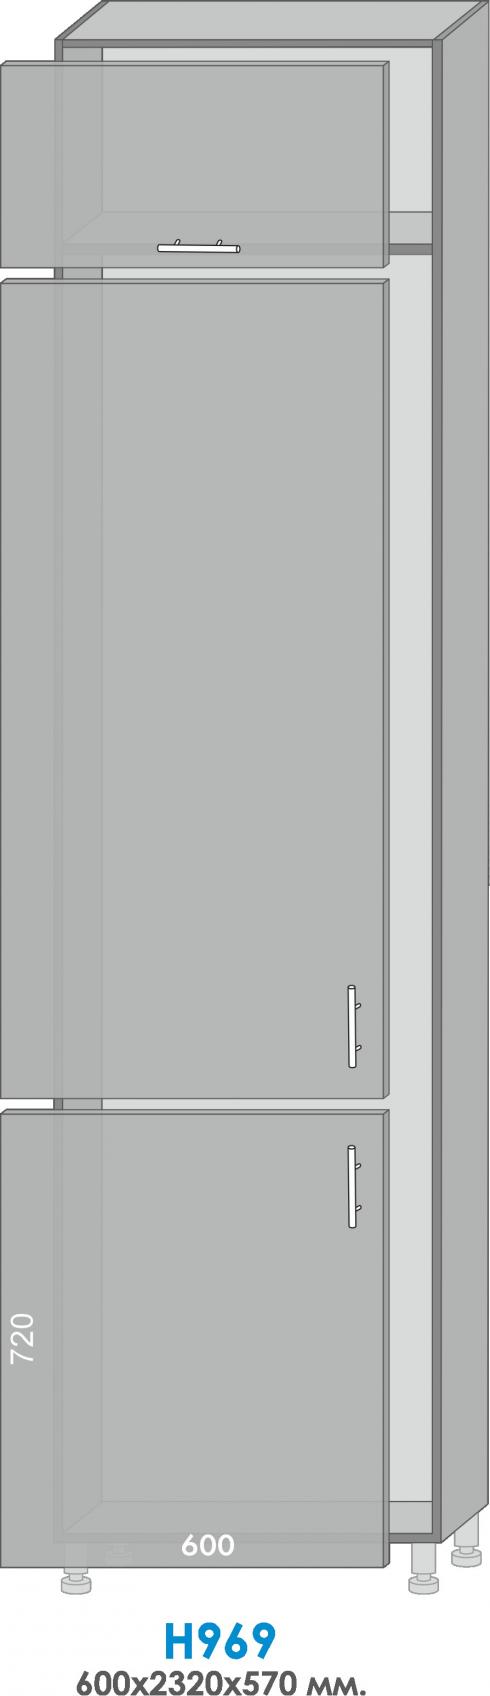 Пенал Н969 холодильник витрина (600/2320/570)